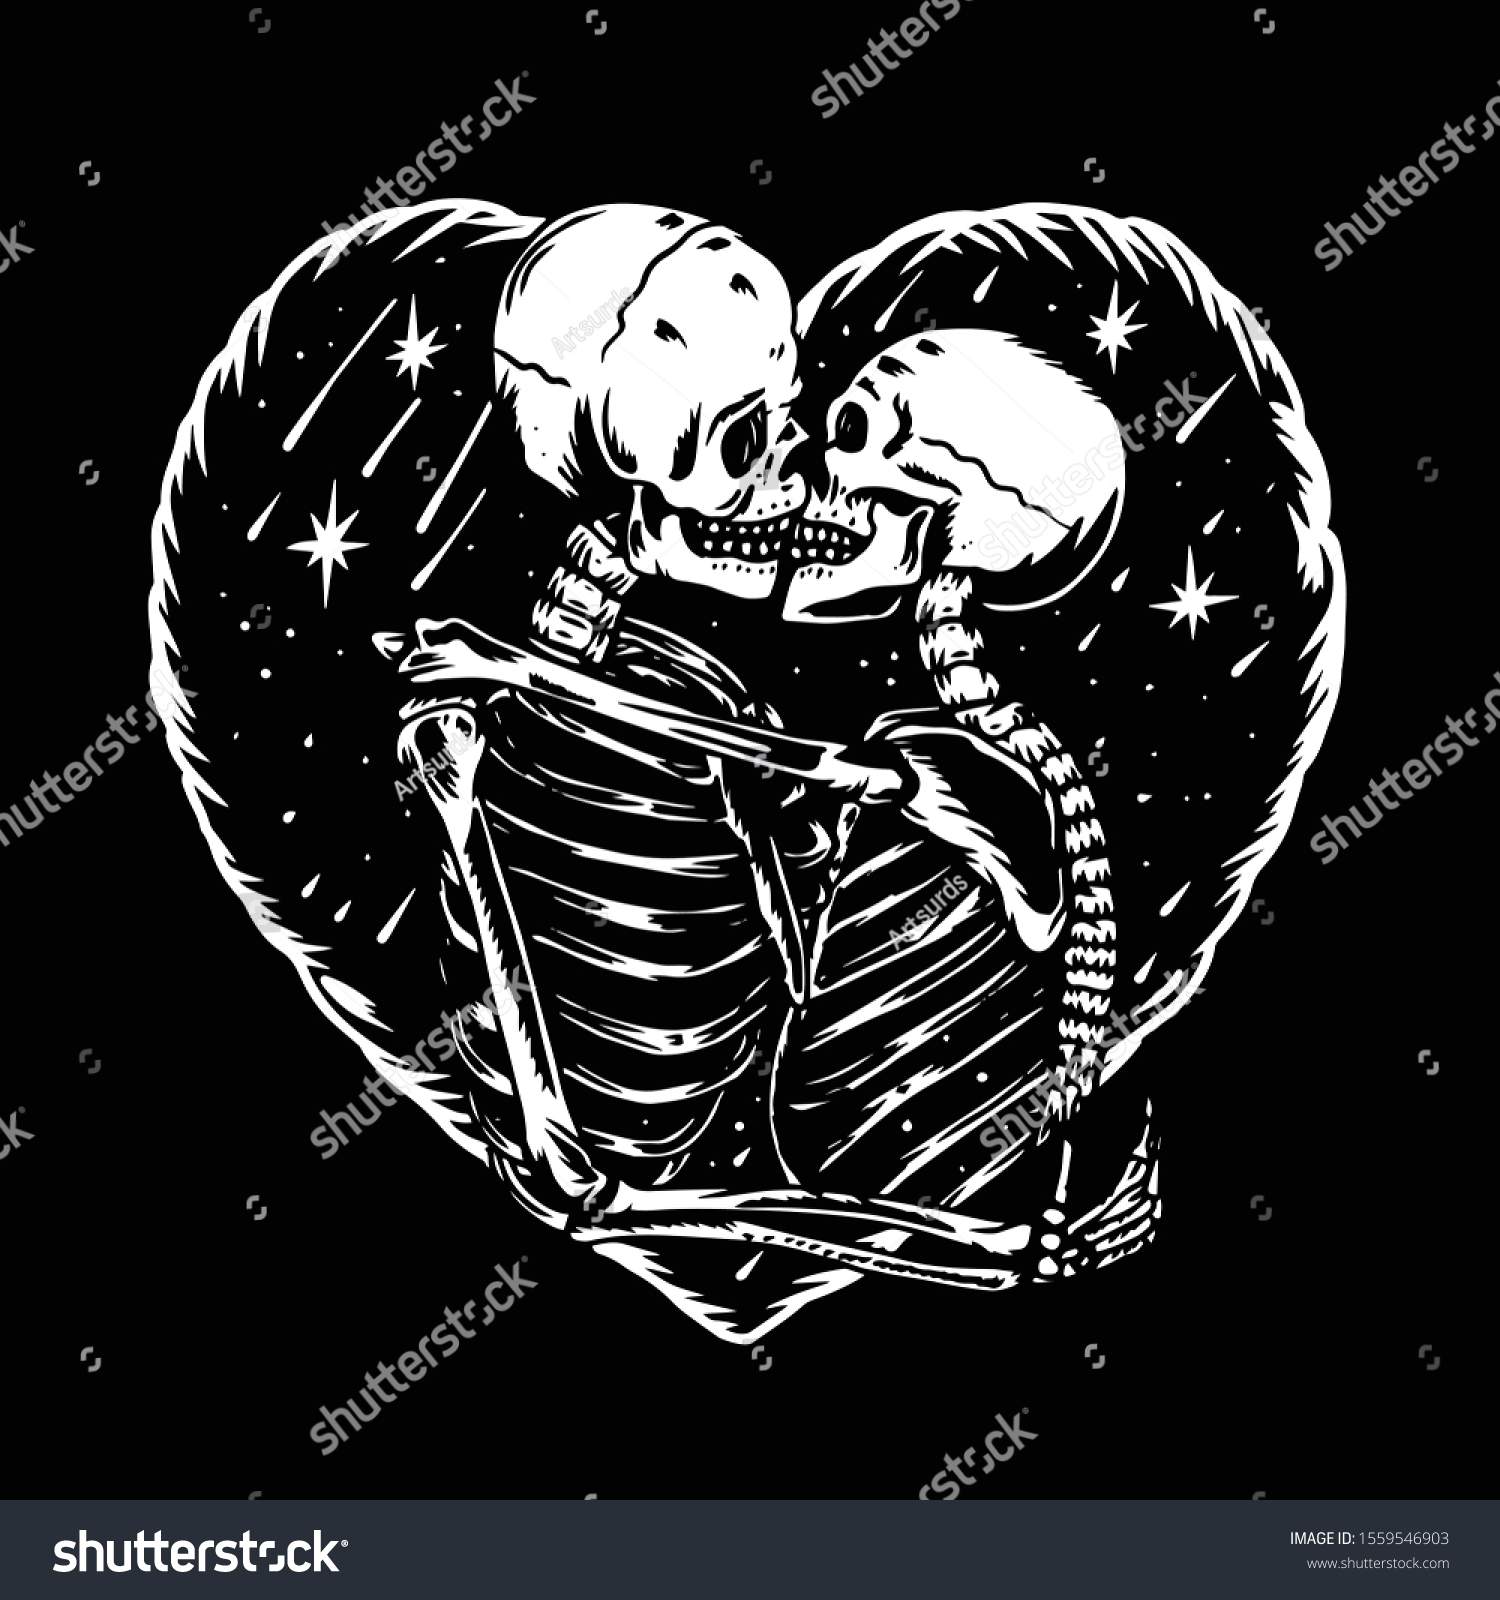 Kiss skeleton Images, Stock Photos & Vectors Shutterstock